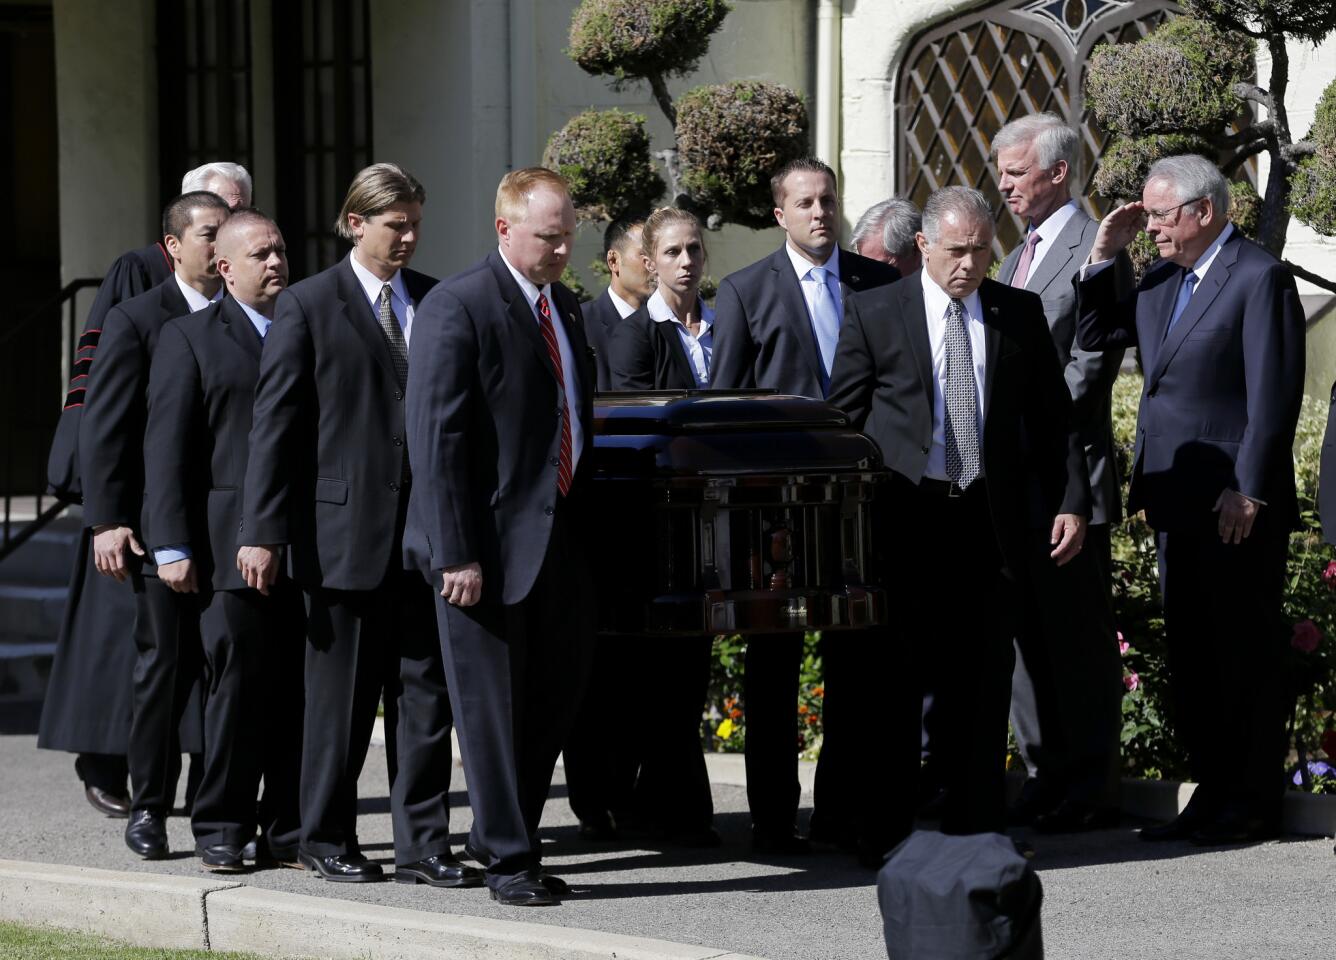 Nancy Reagan's funeral